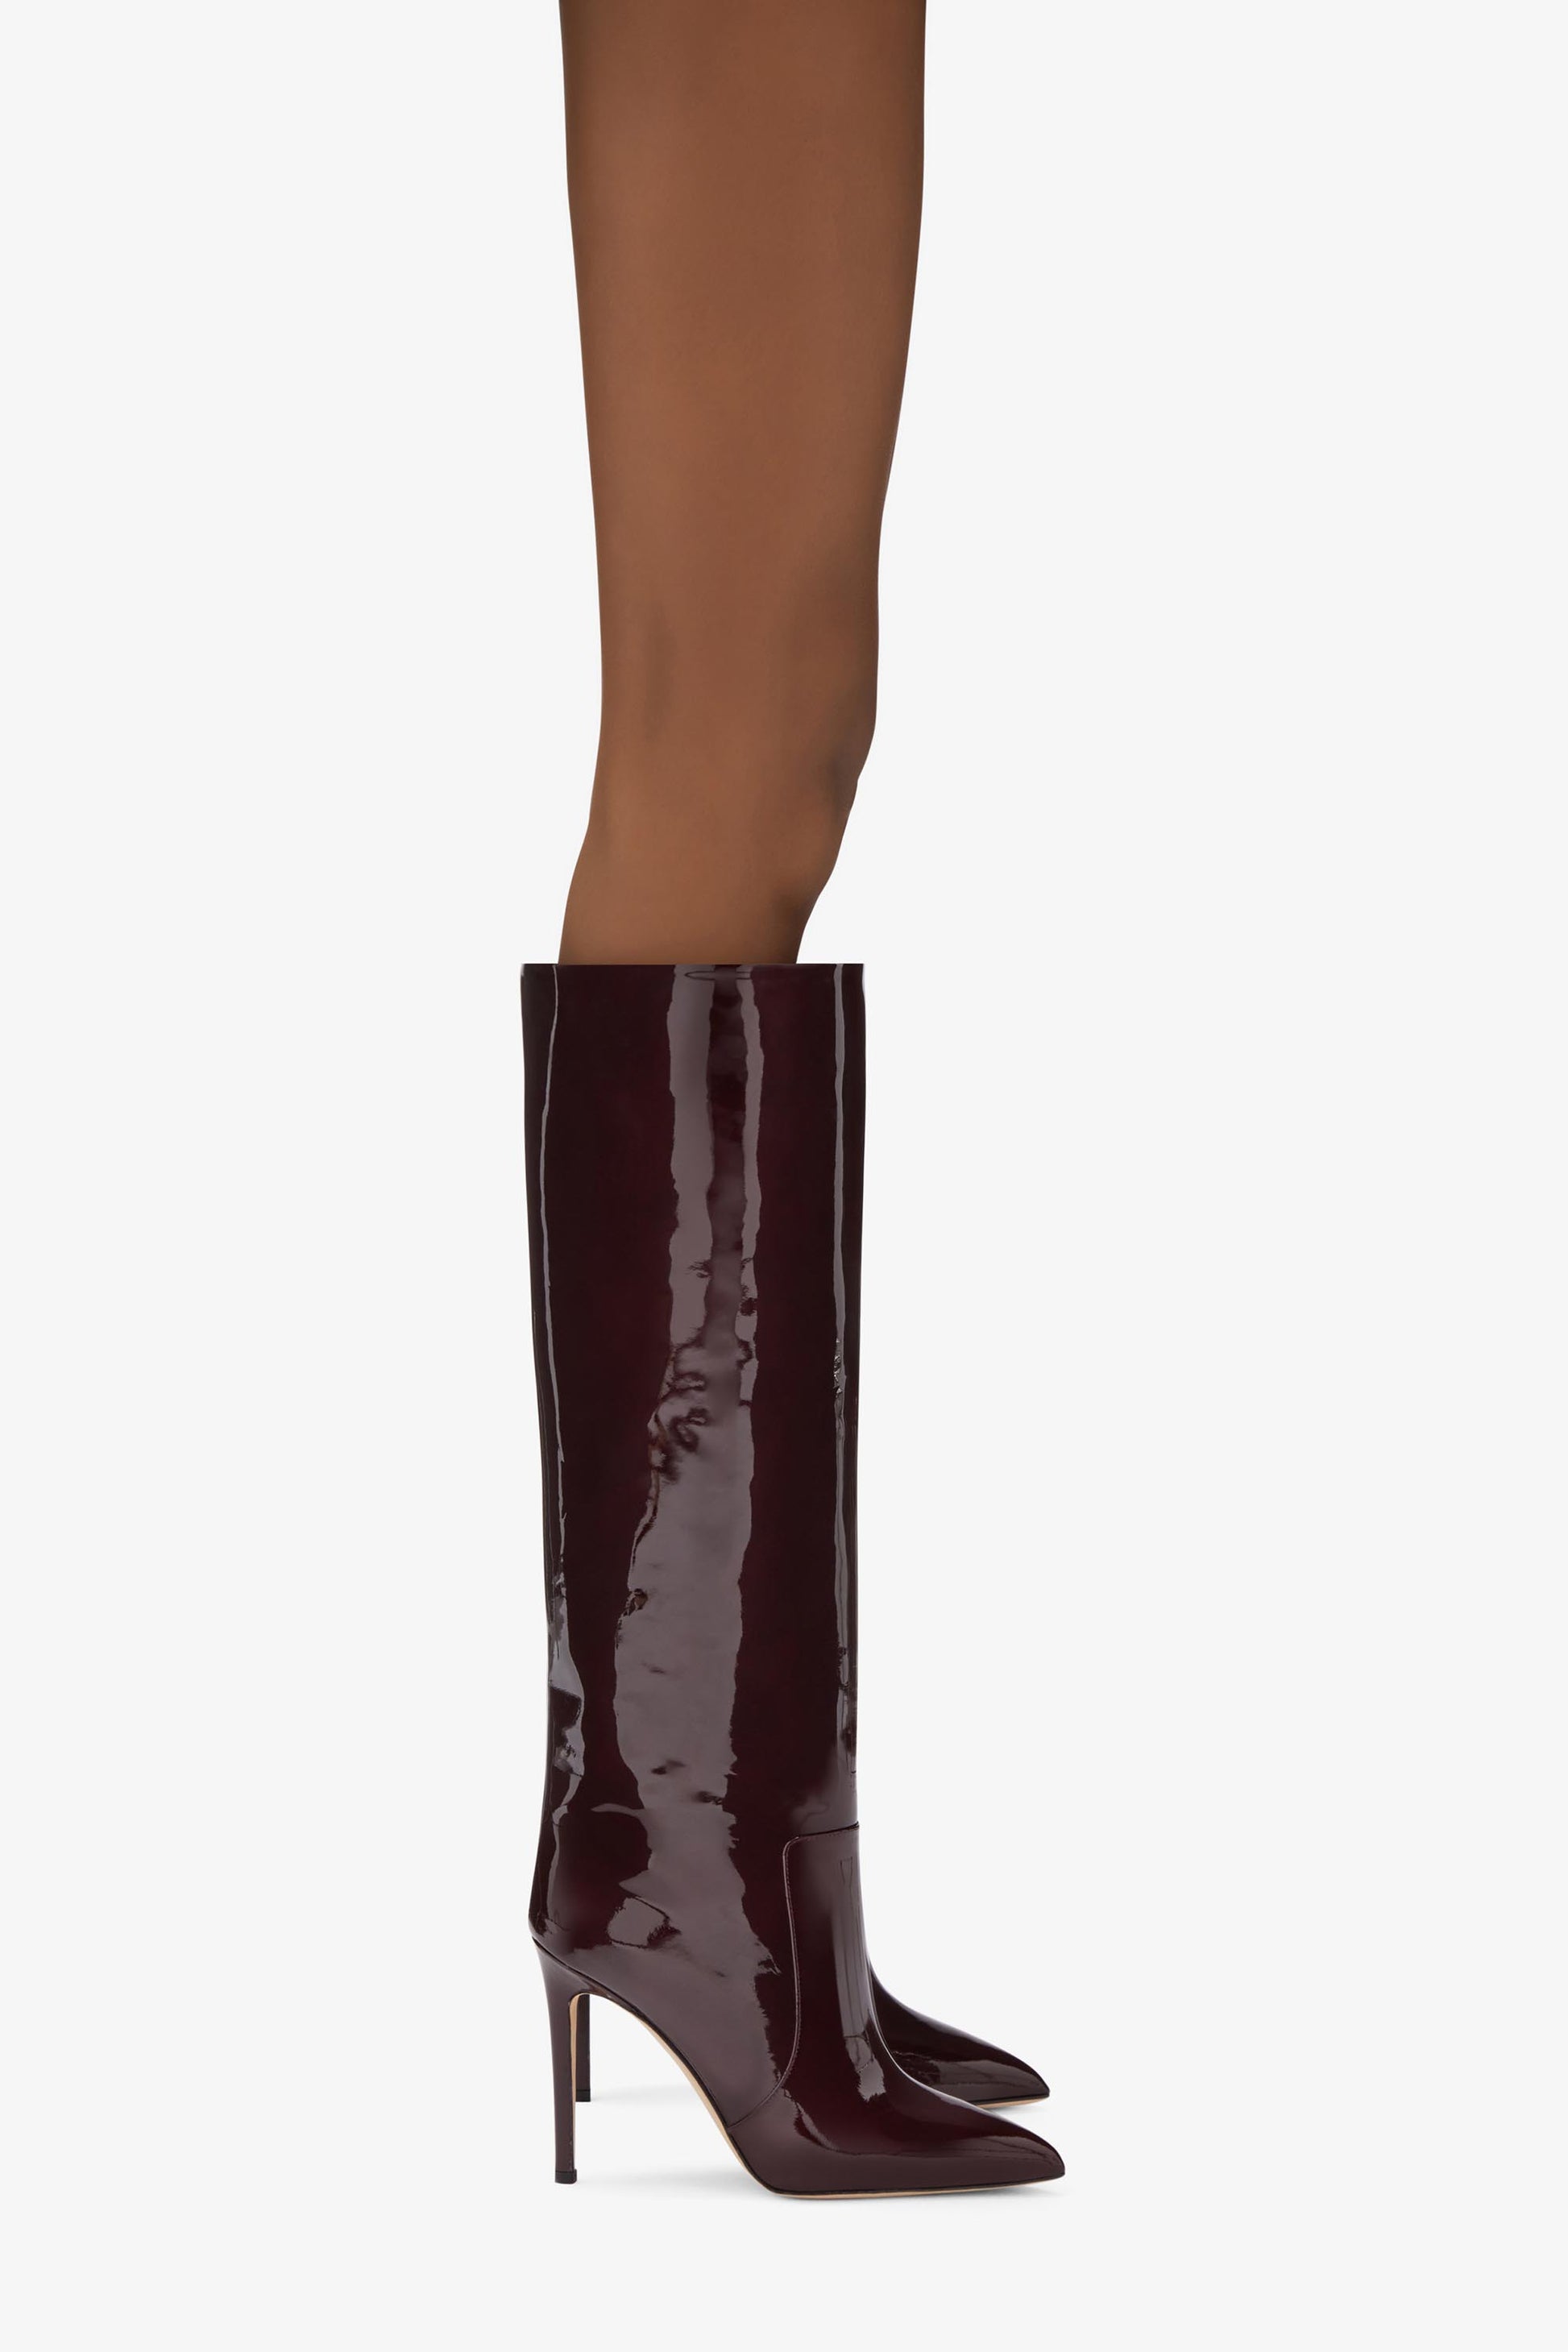 Rouge noir patent stiletto boots - Product worn